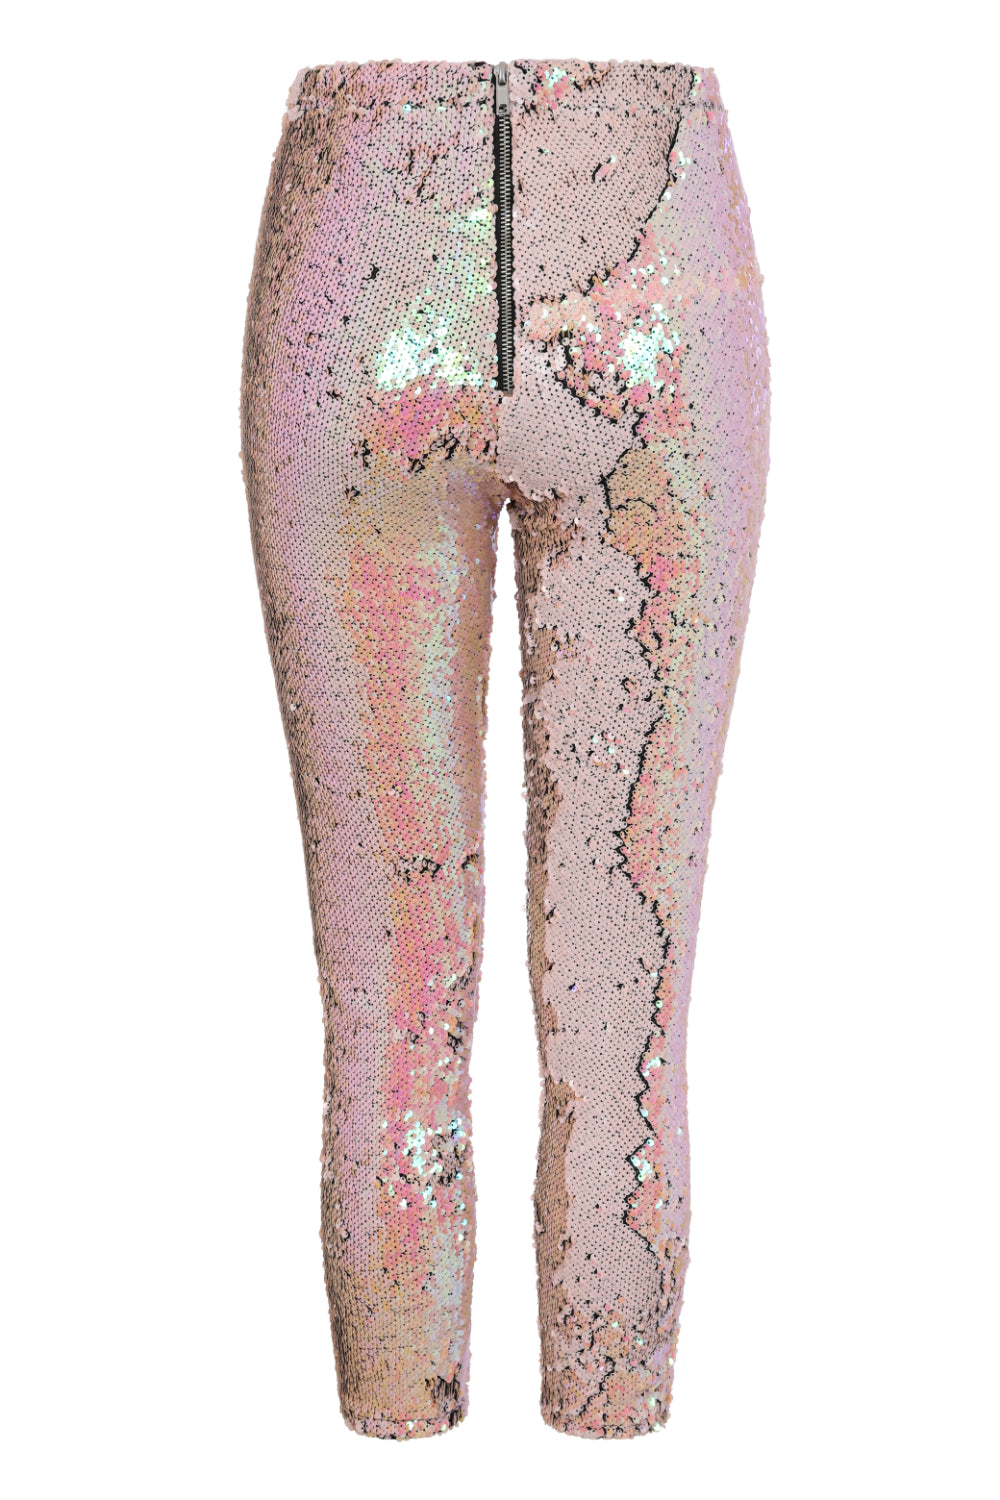 Koko Holographic Sequin Embellished Stretch Leggings